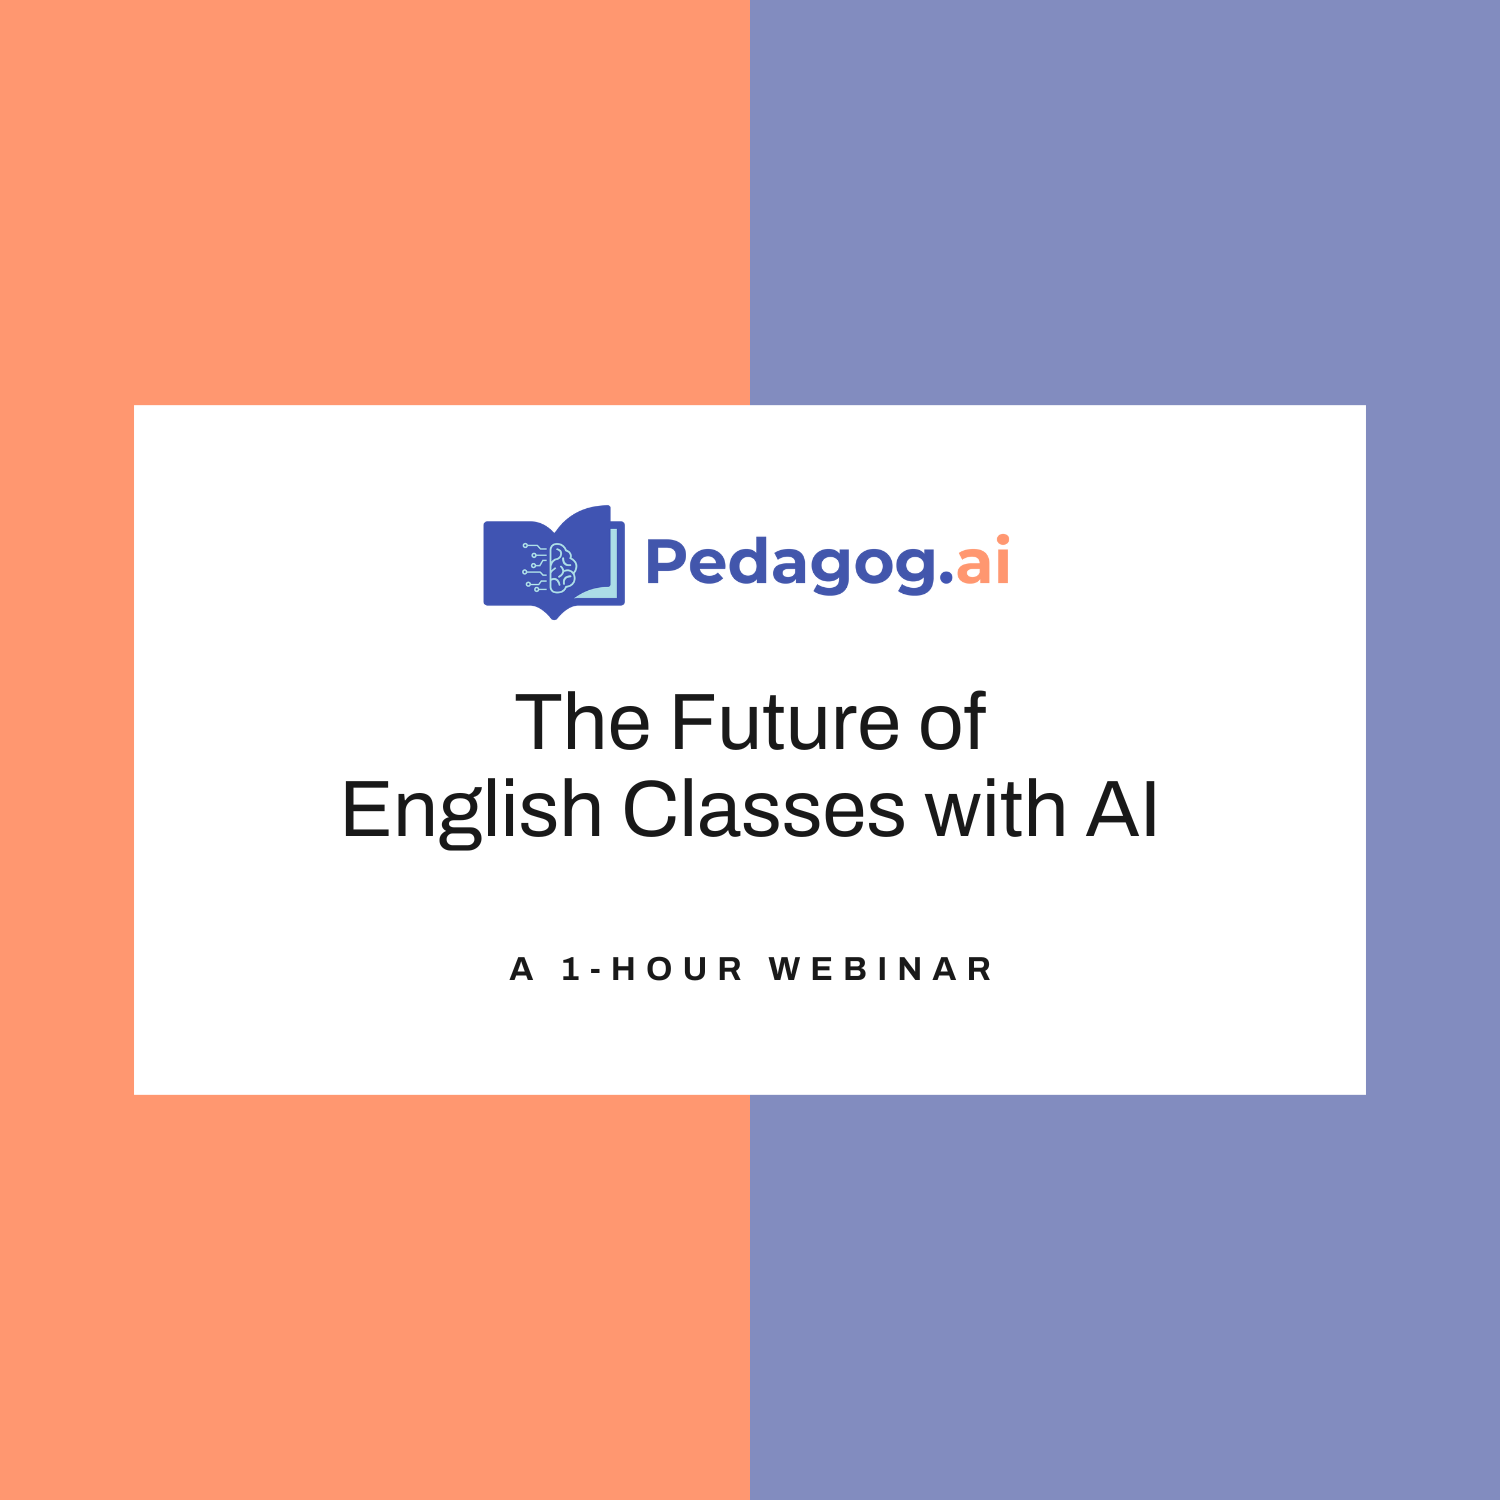 The Future of English Classes with AI